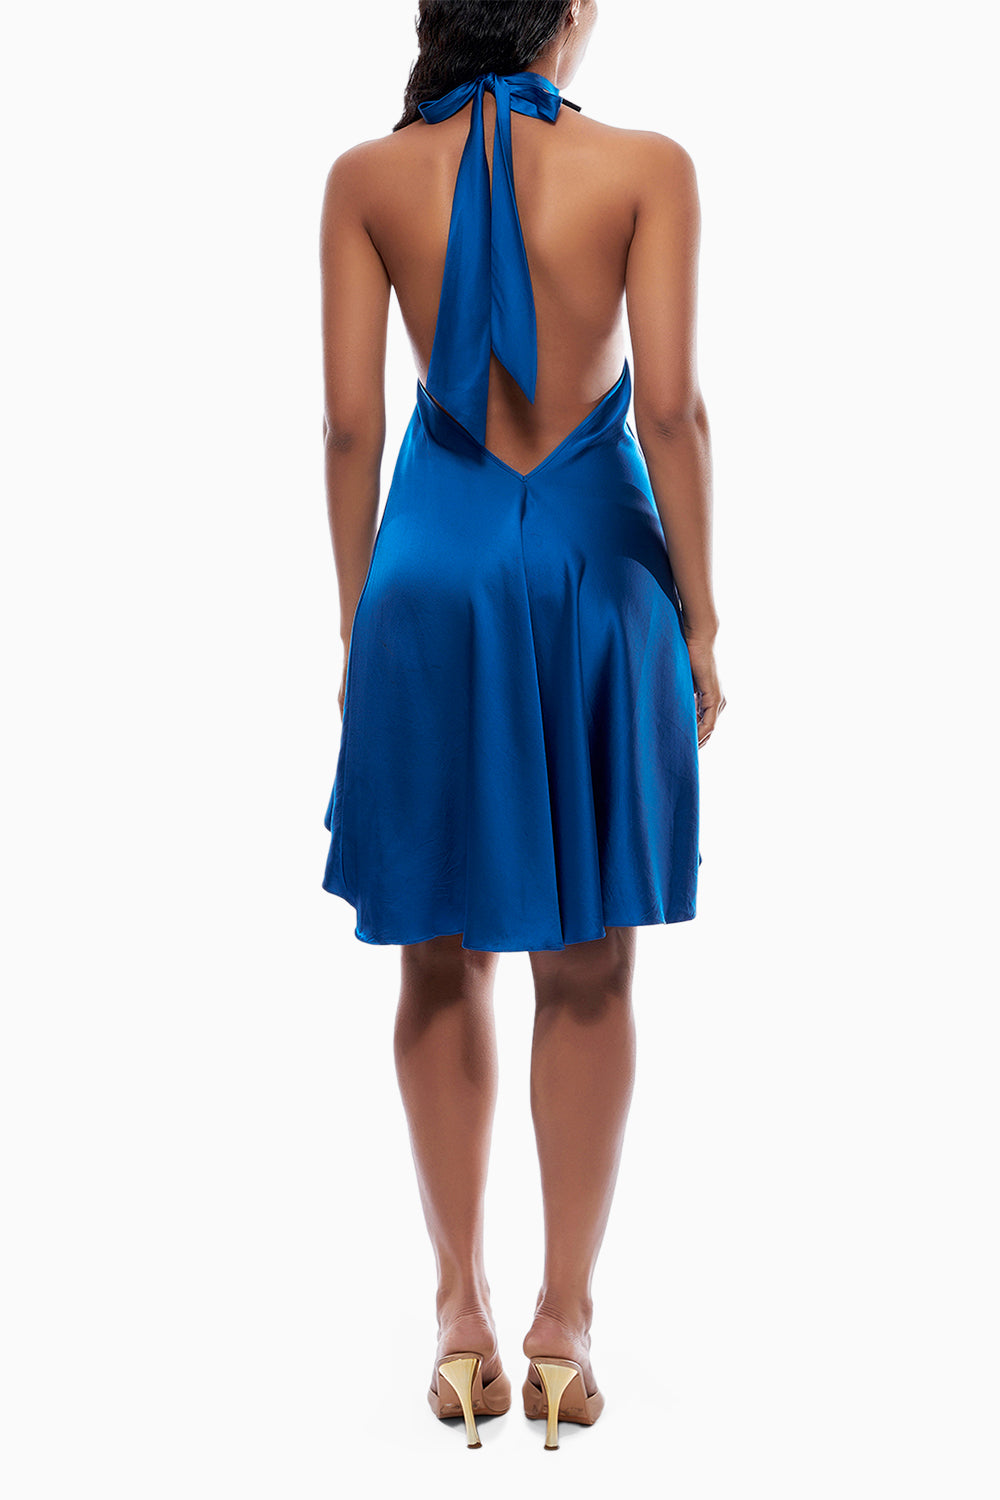 Blue Satin Slip Dress